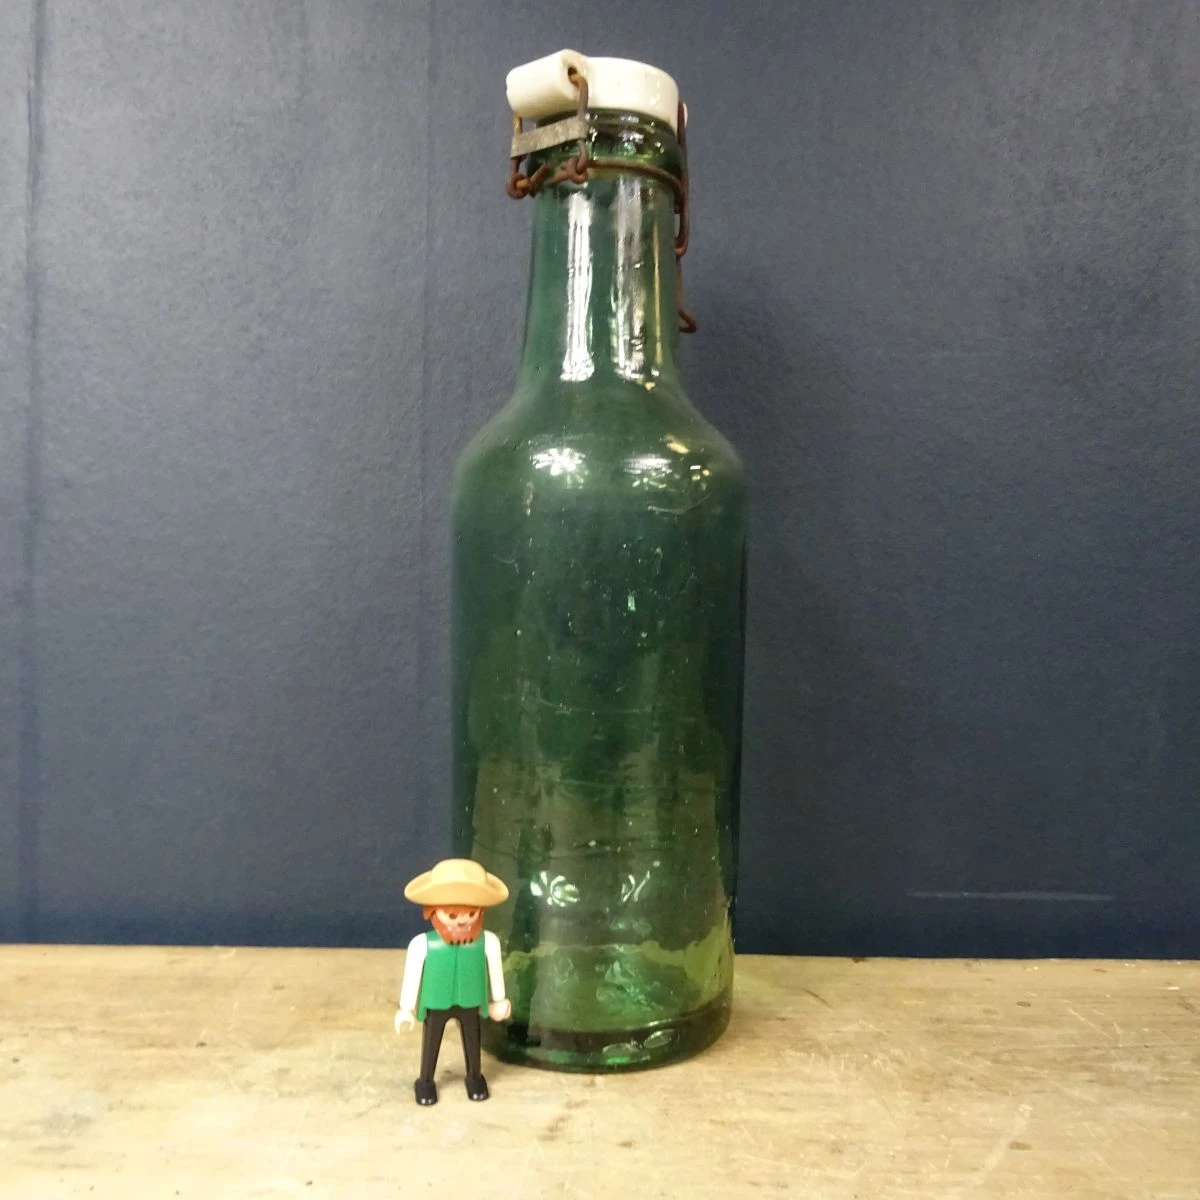 Petite bouteille en verre vert